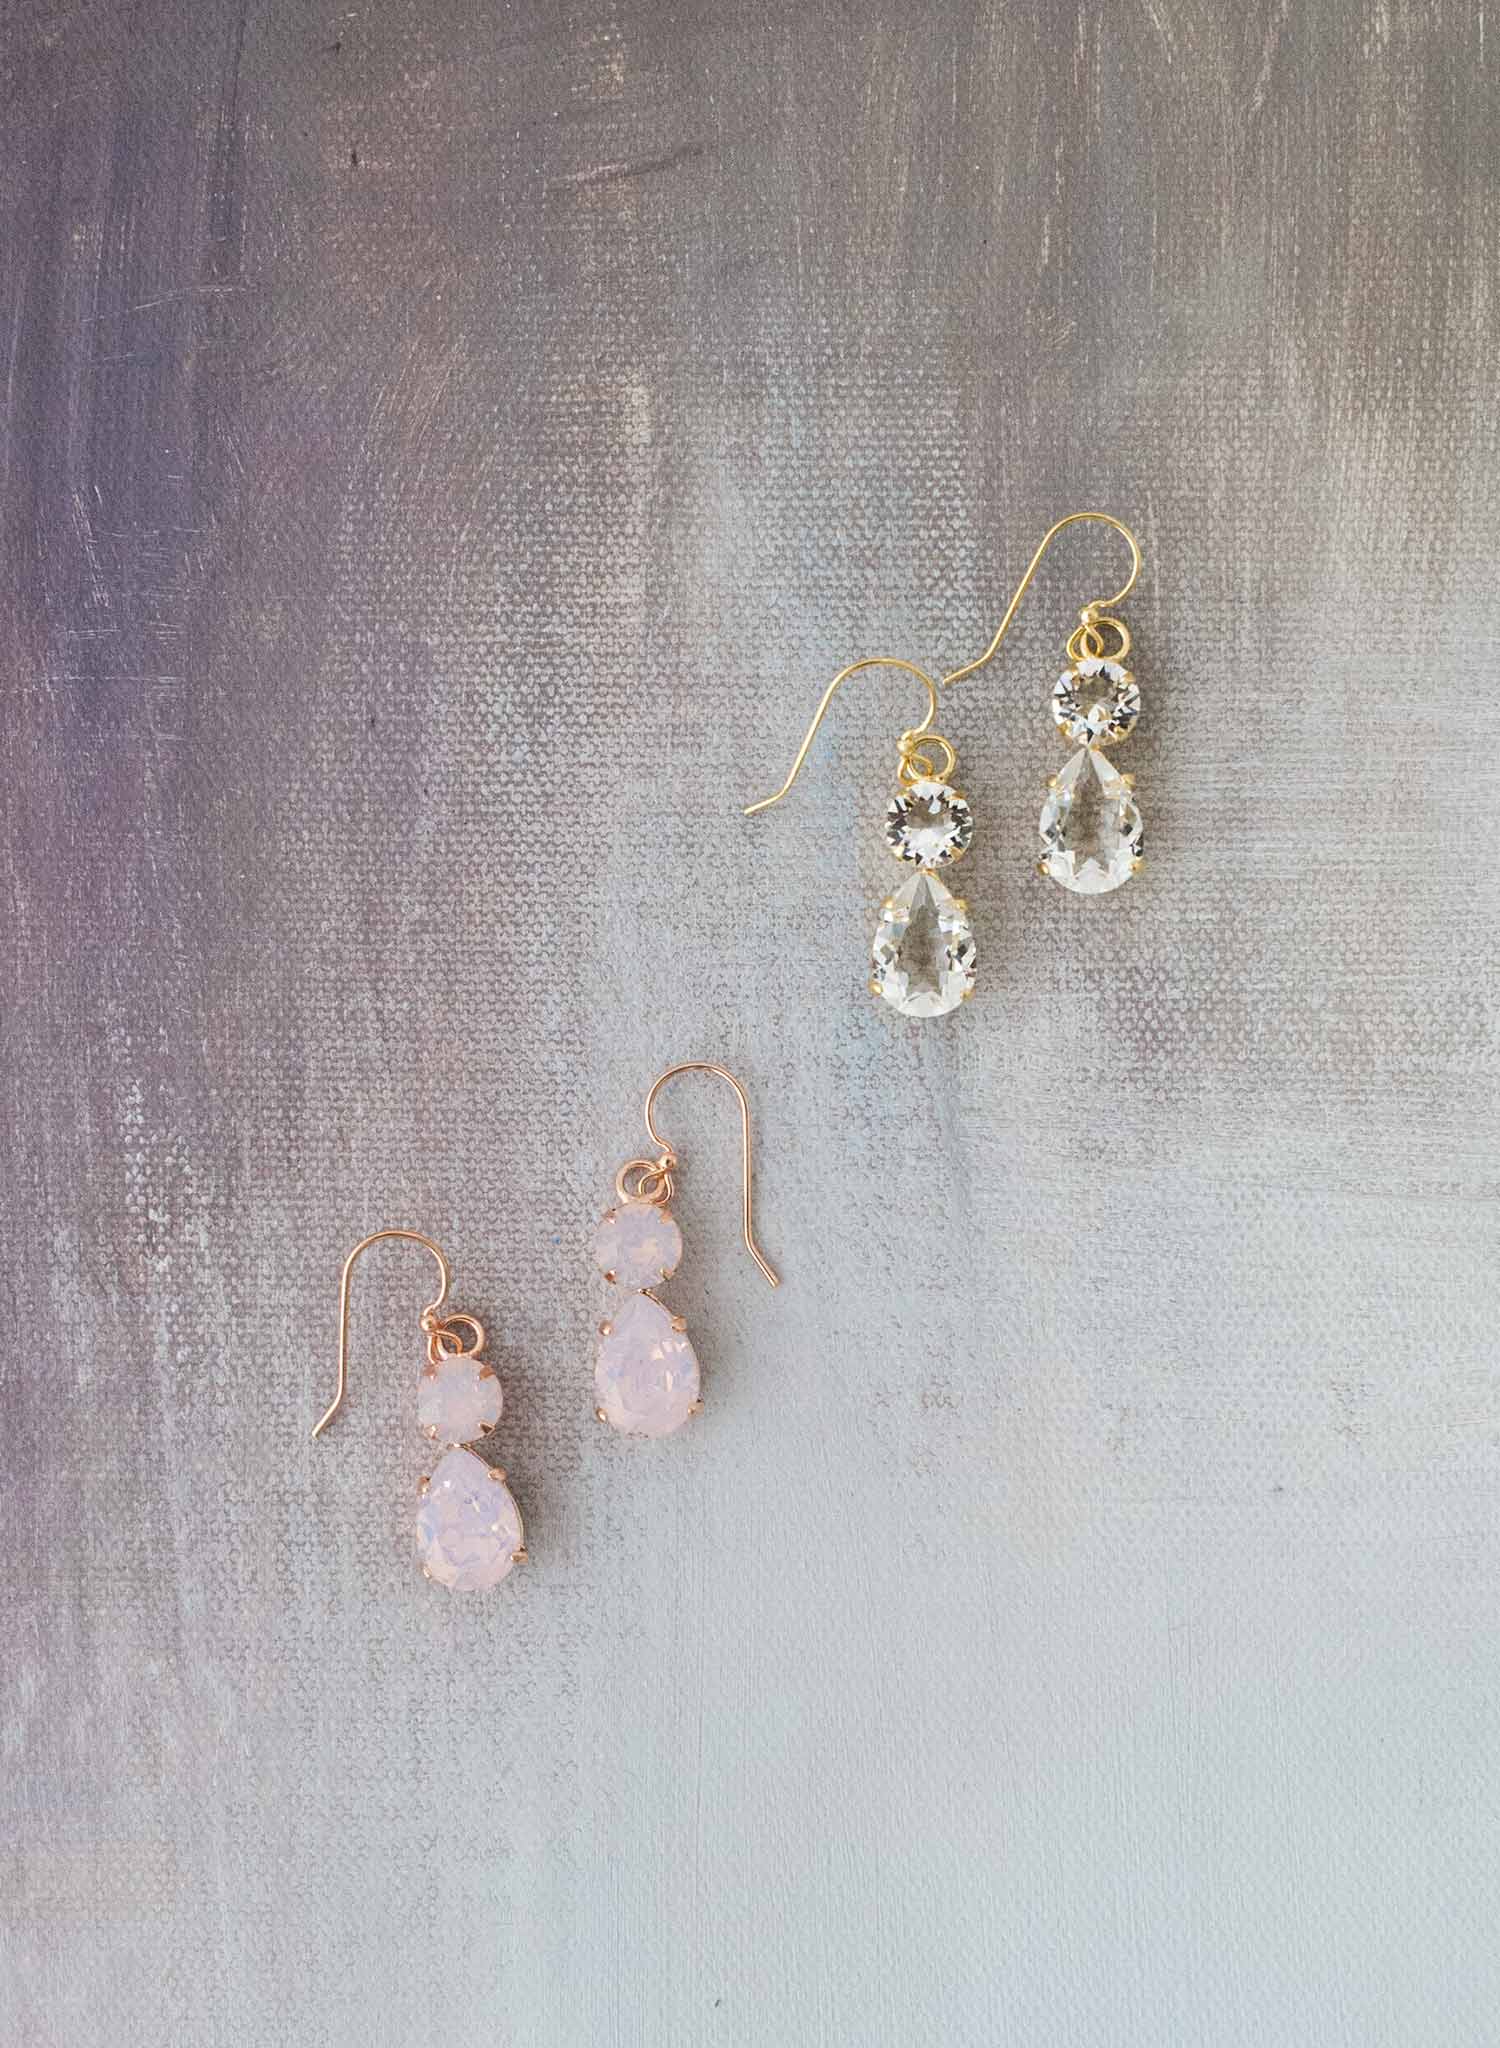 Bridal Earrings, Earrings, Crystal Earrings, Accessory - Simple Crystal Pear Drop Earrings - Style #9015 Silver/Clear